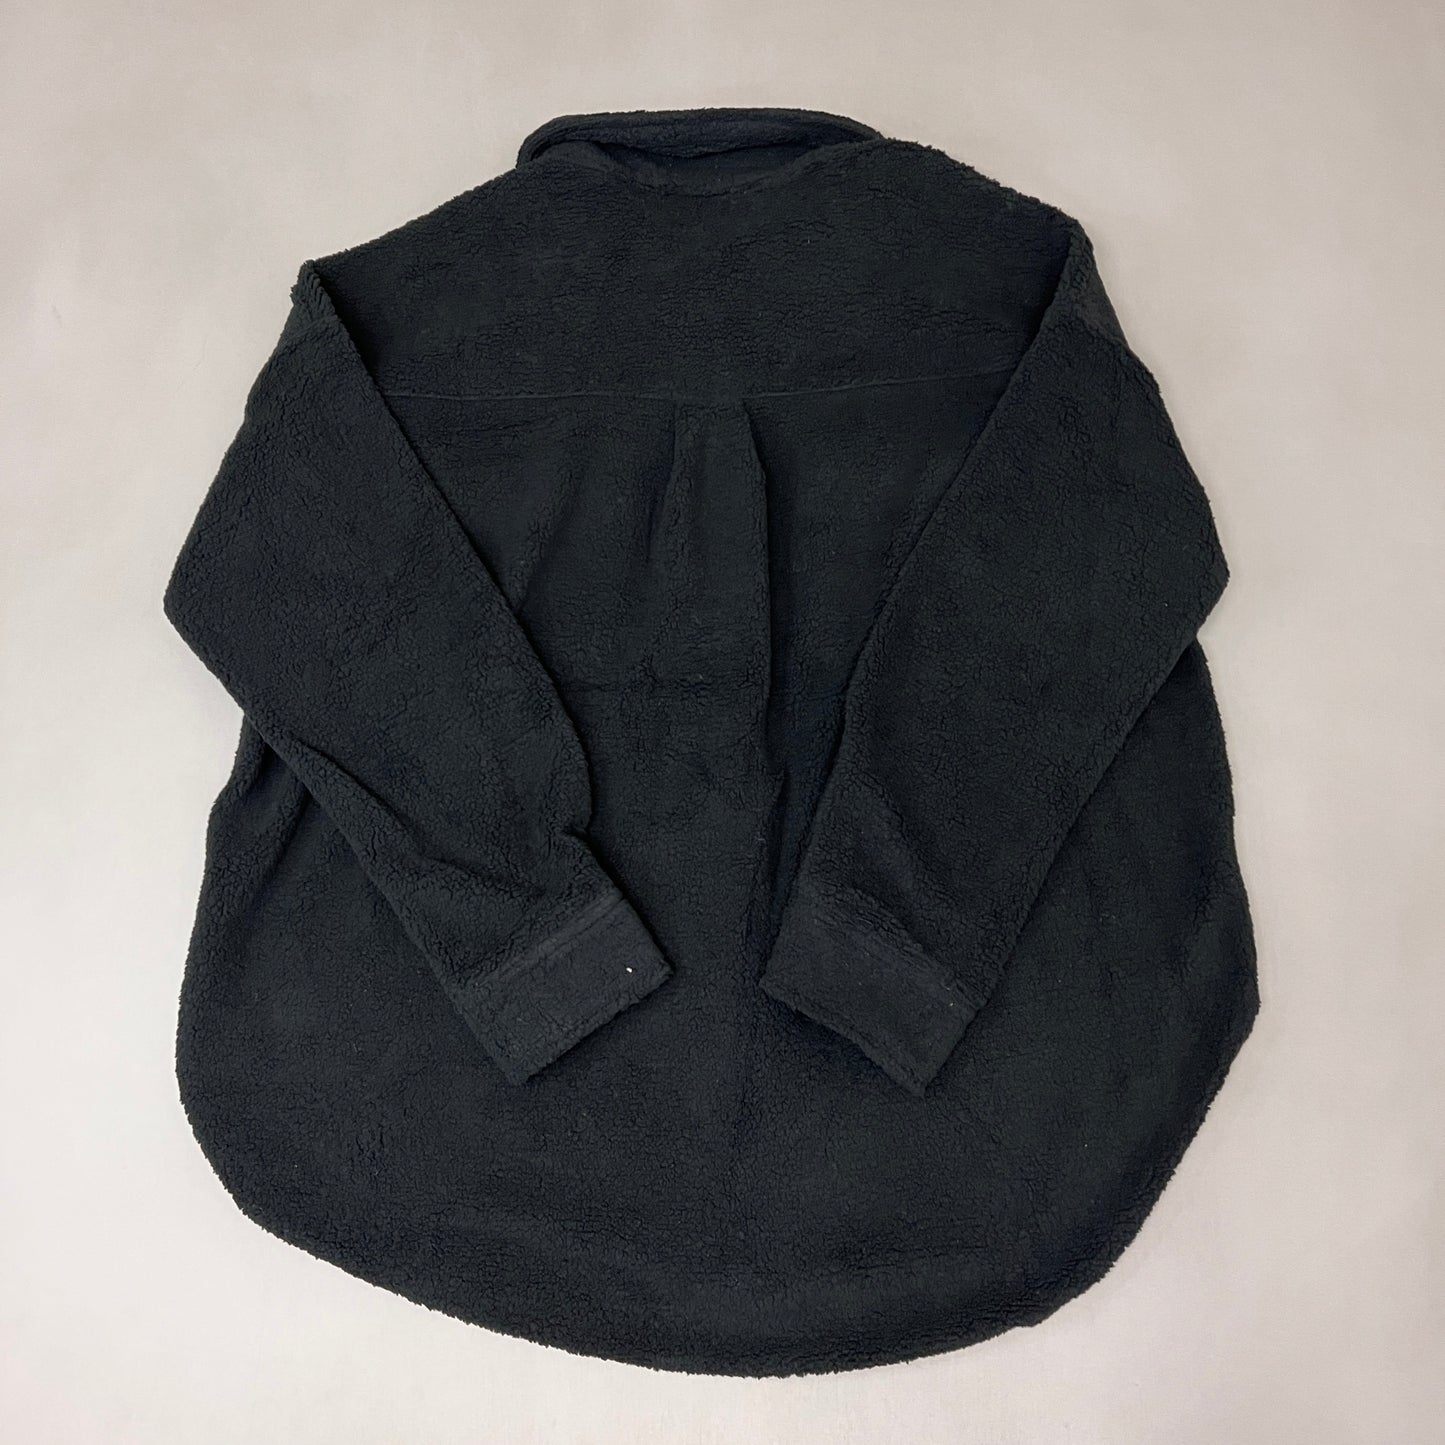 PINK LILY Fleece Button-up Jacket Women's Sz L Black PL177 (New)